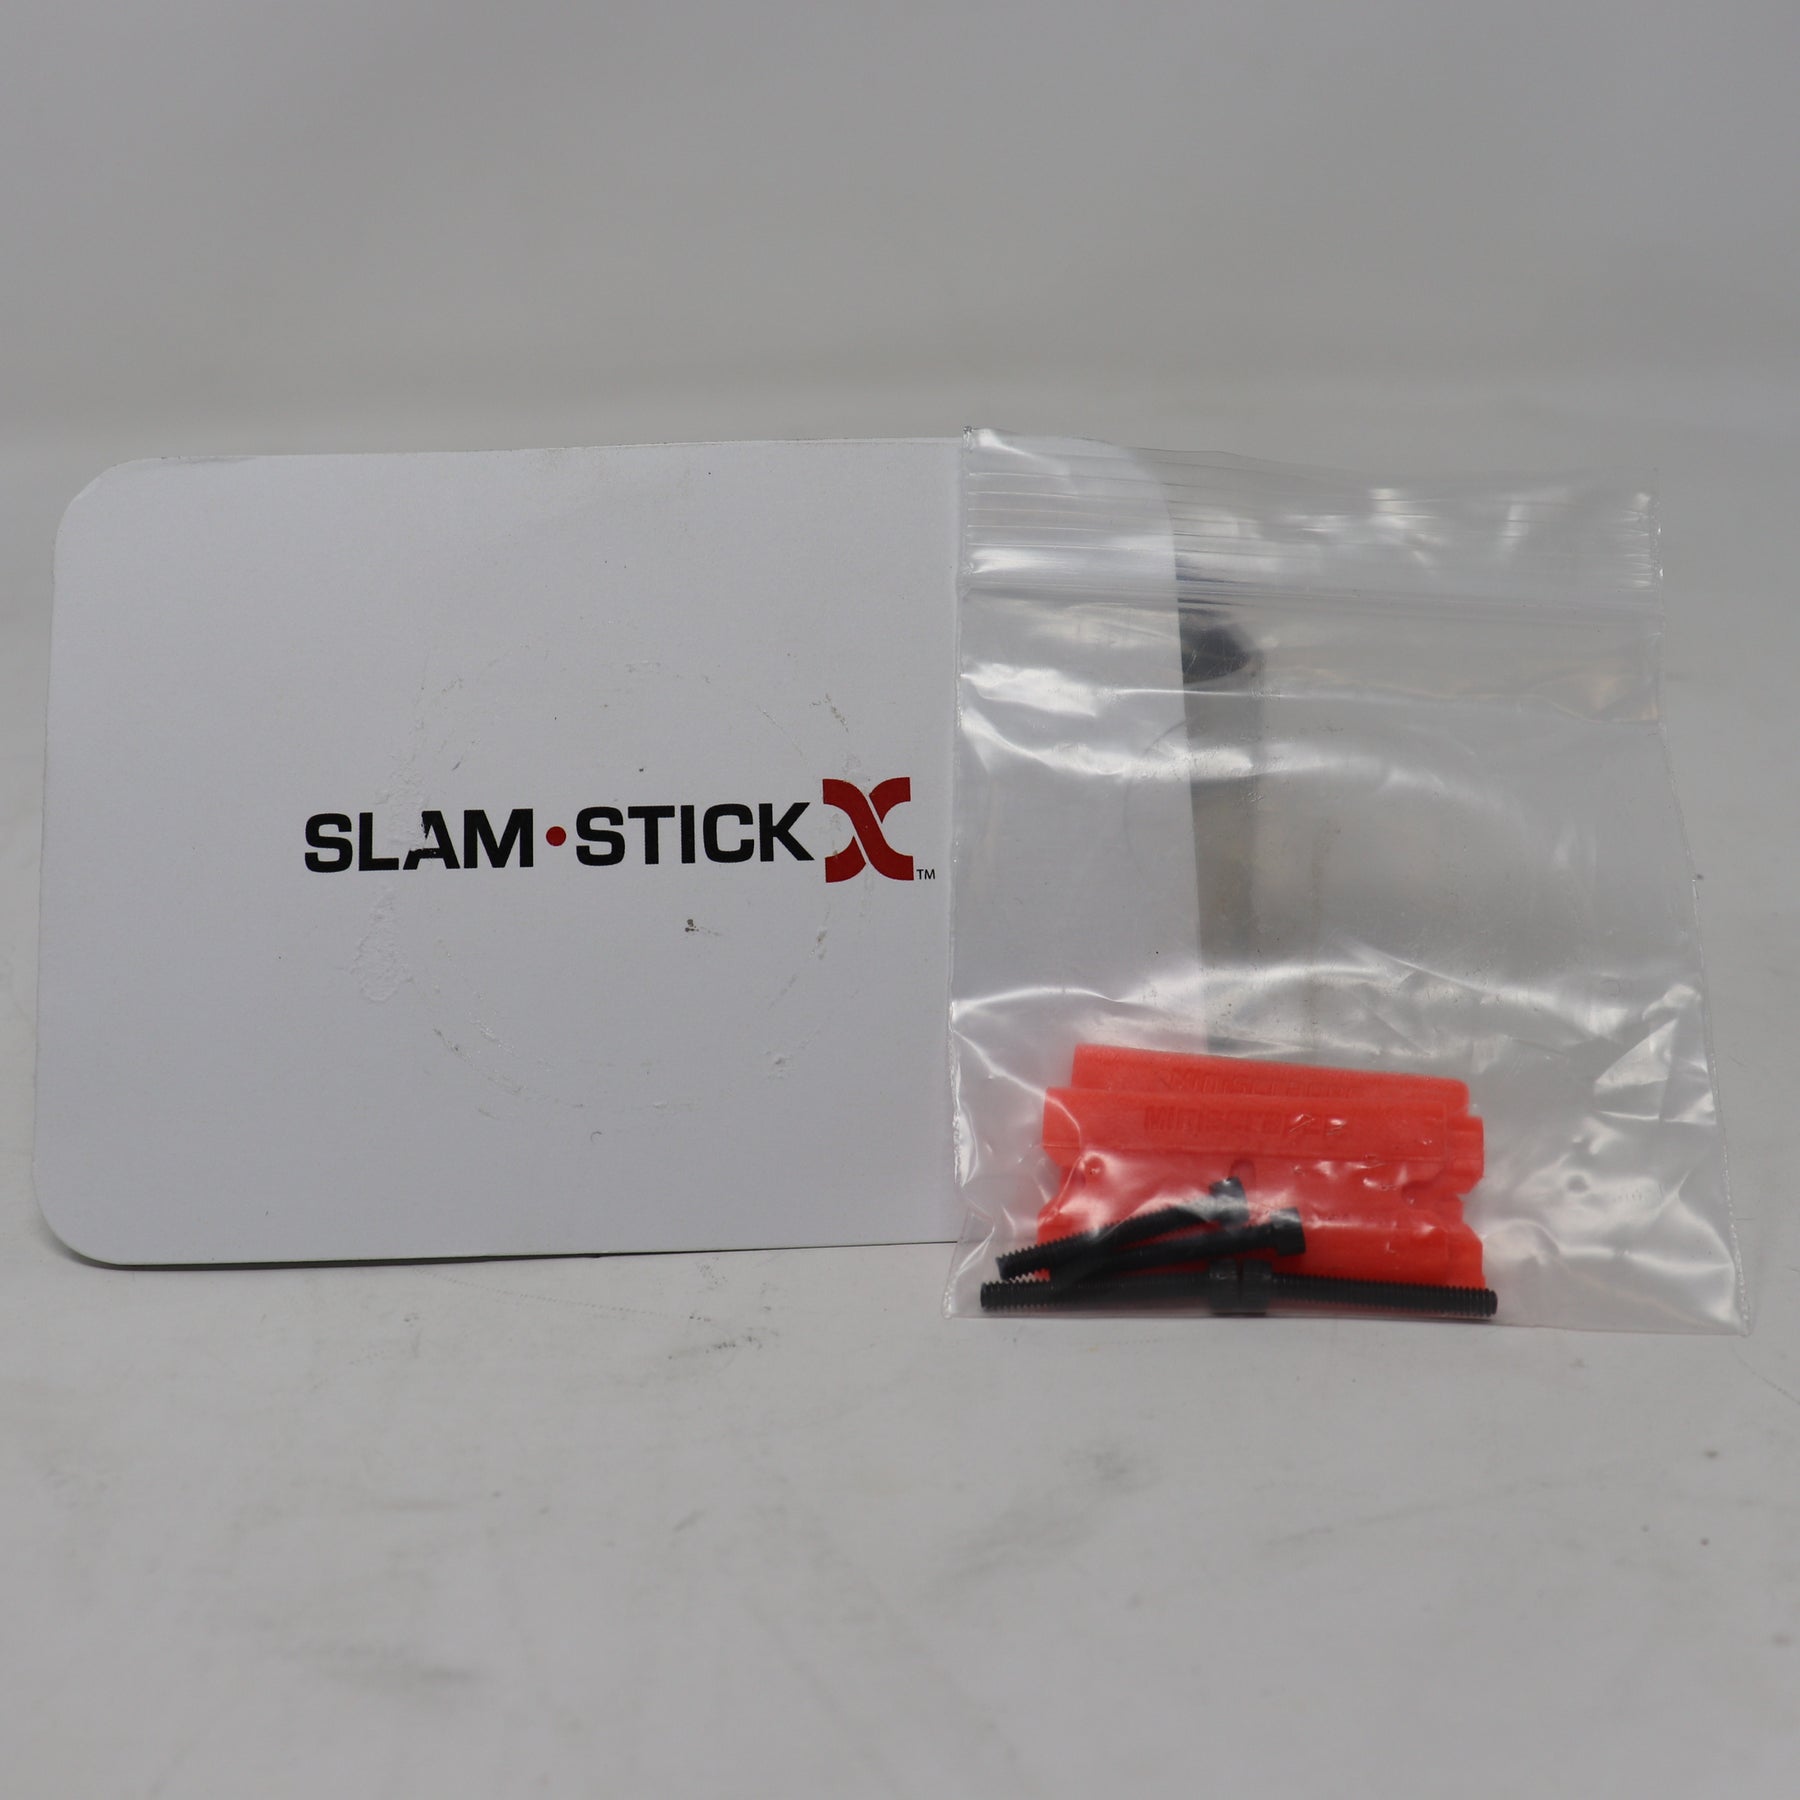 Mide / Endaq Slam Stick X Vibration & Shock Data Logger LOG-0002-025G-DC-8GB-PC